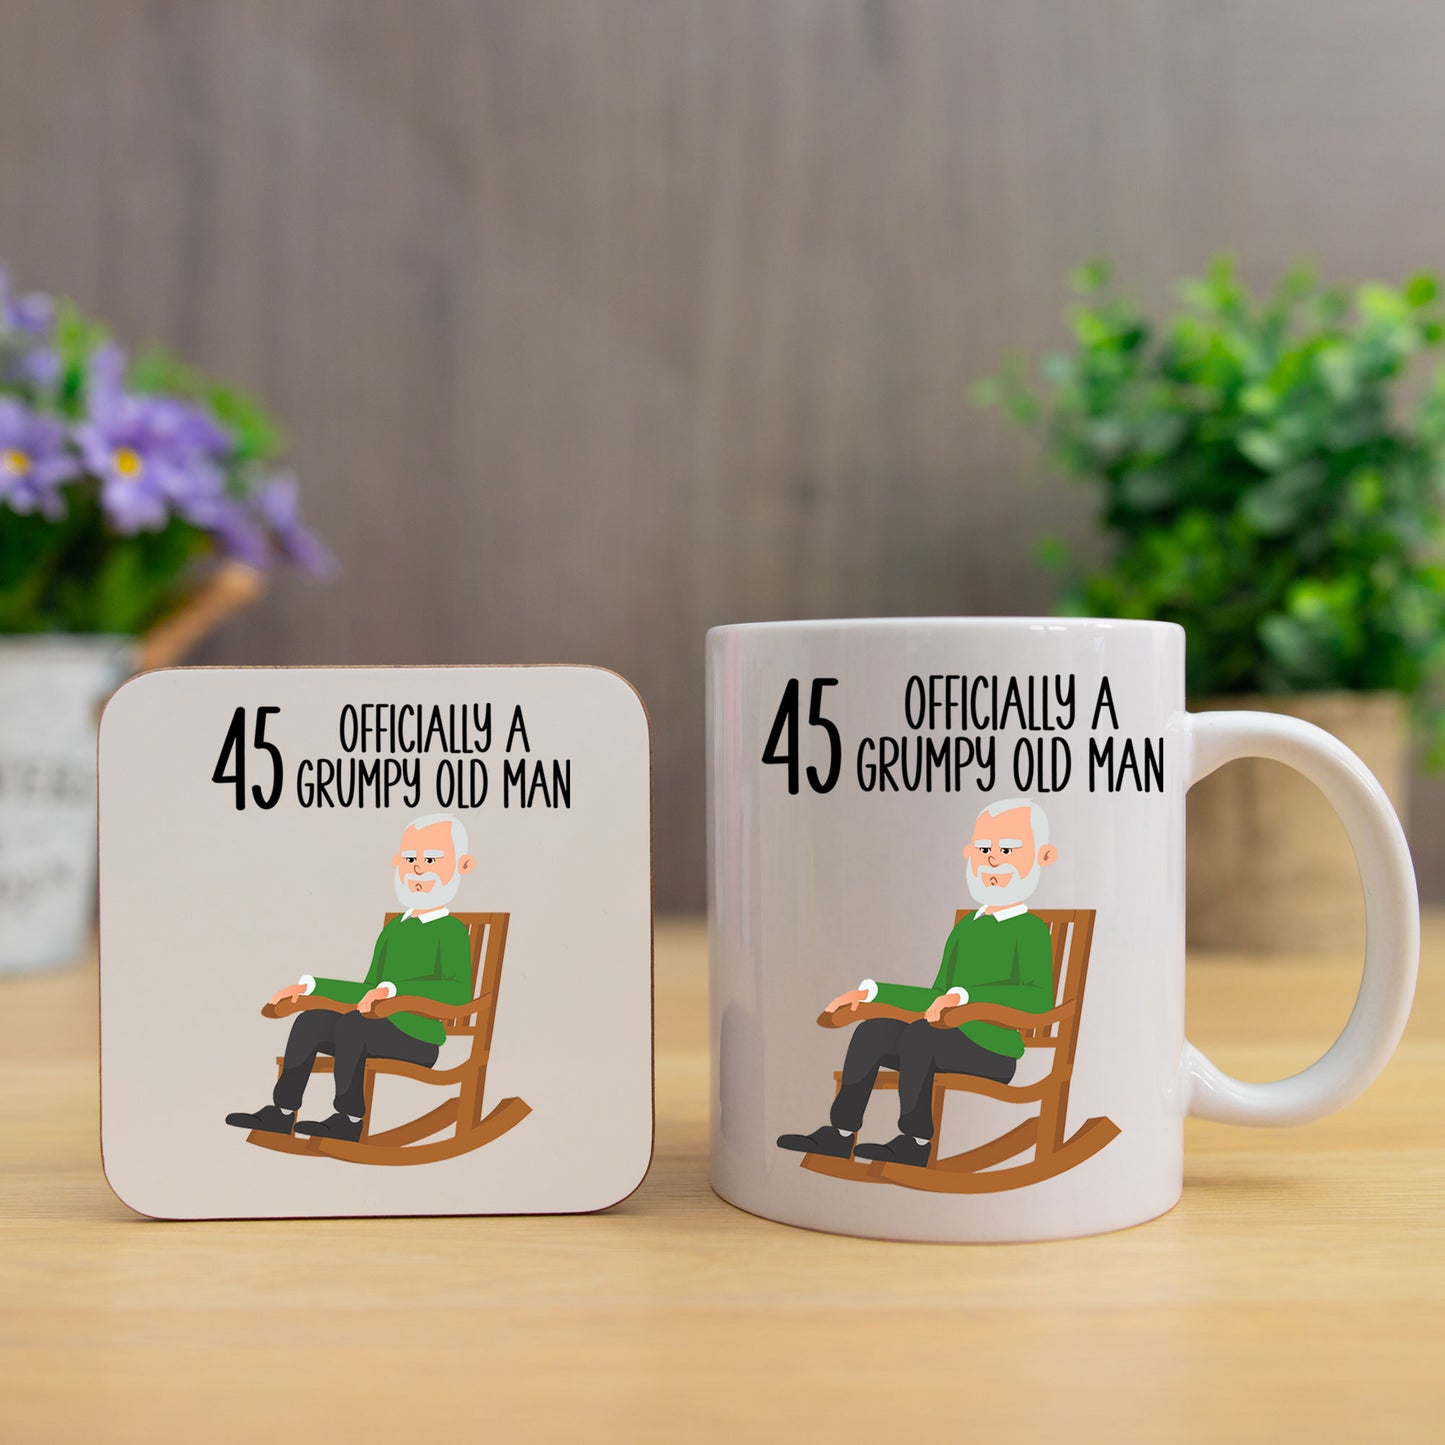 45 Officially A Grumpy Old Man Mug and/or Coaster Gift  - Always Looking Good - Mug & Coaster Set  